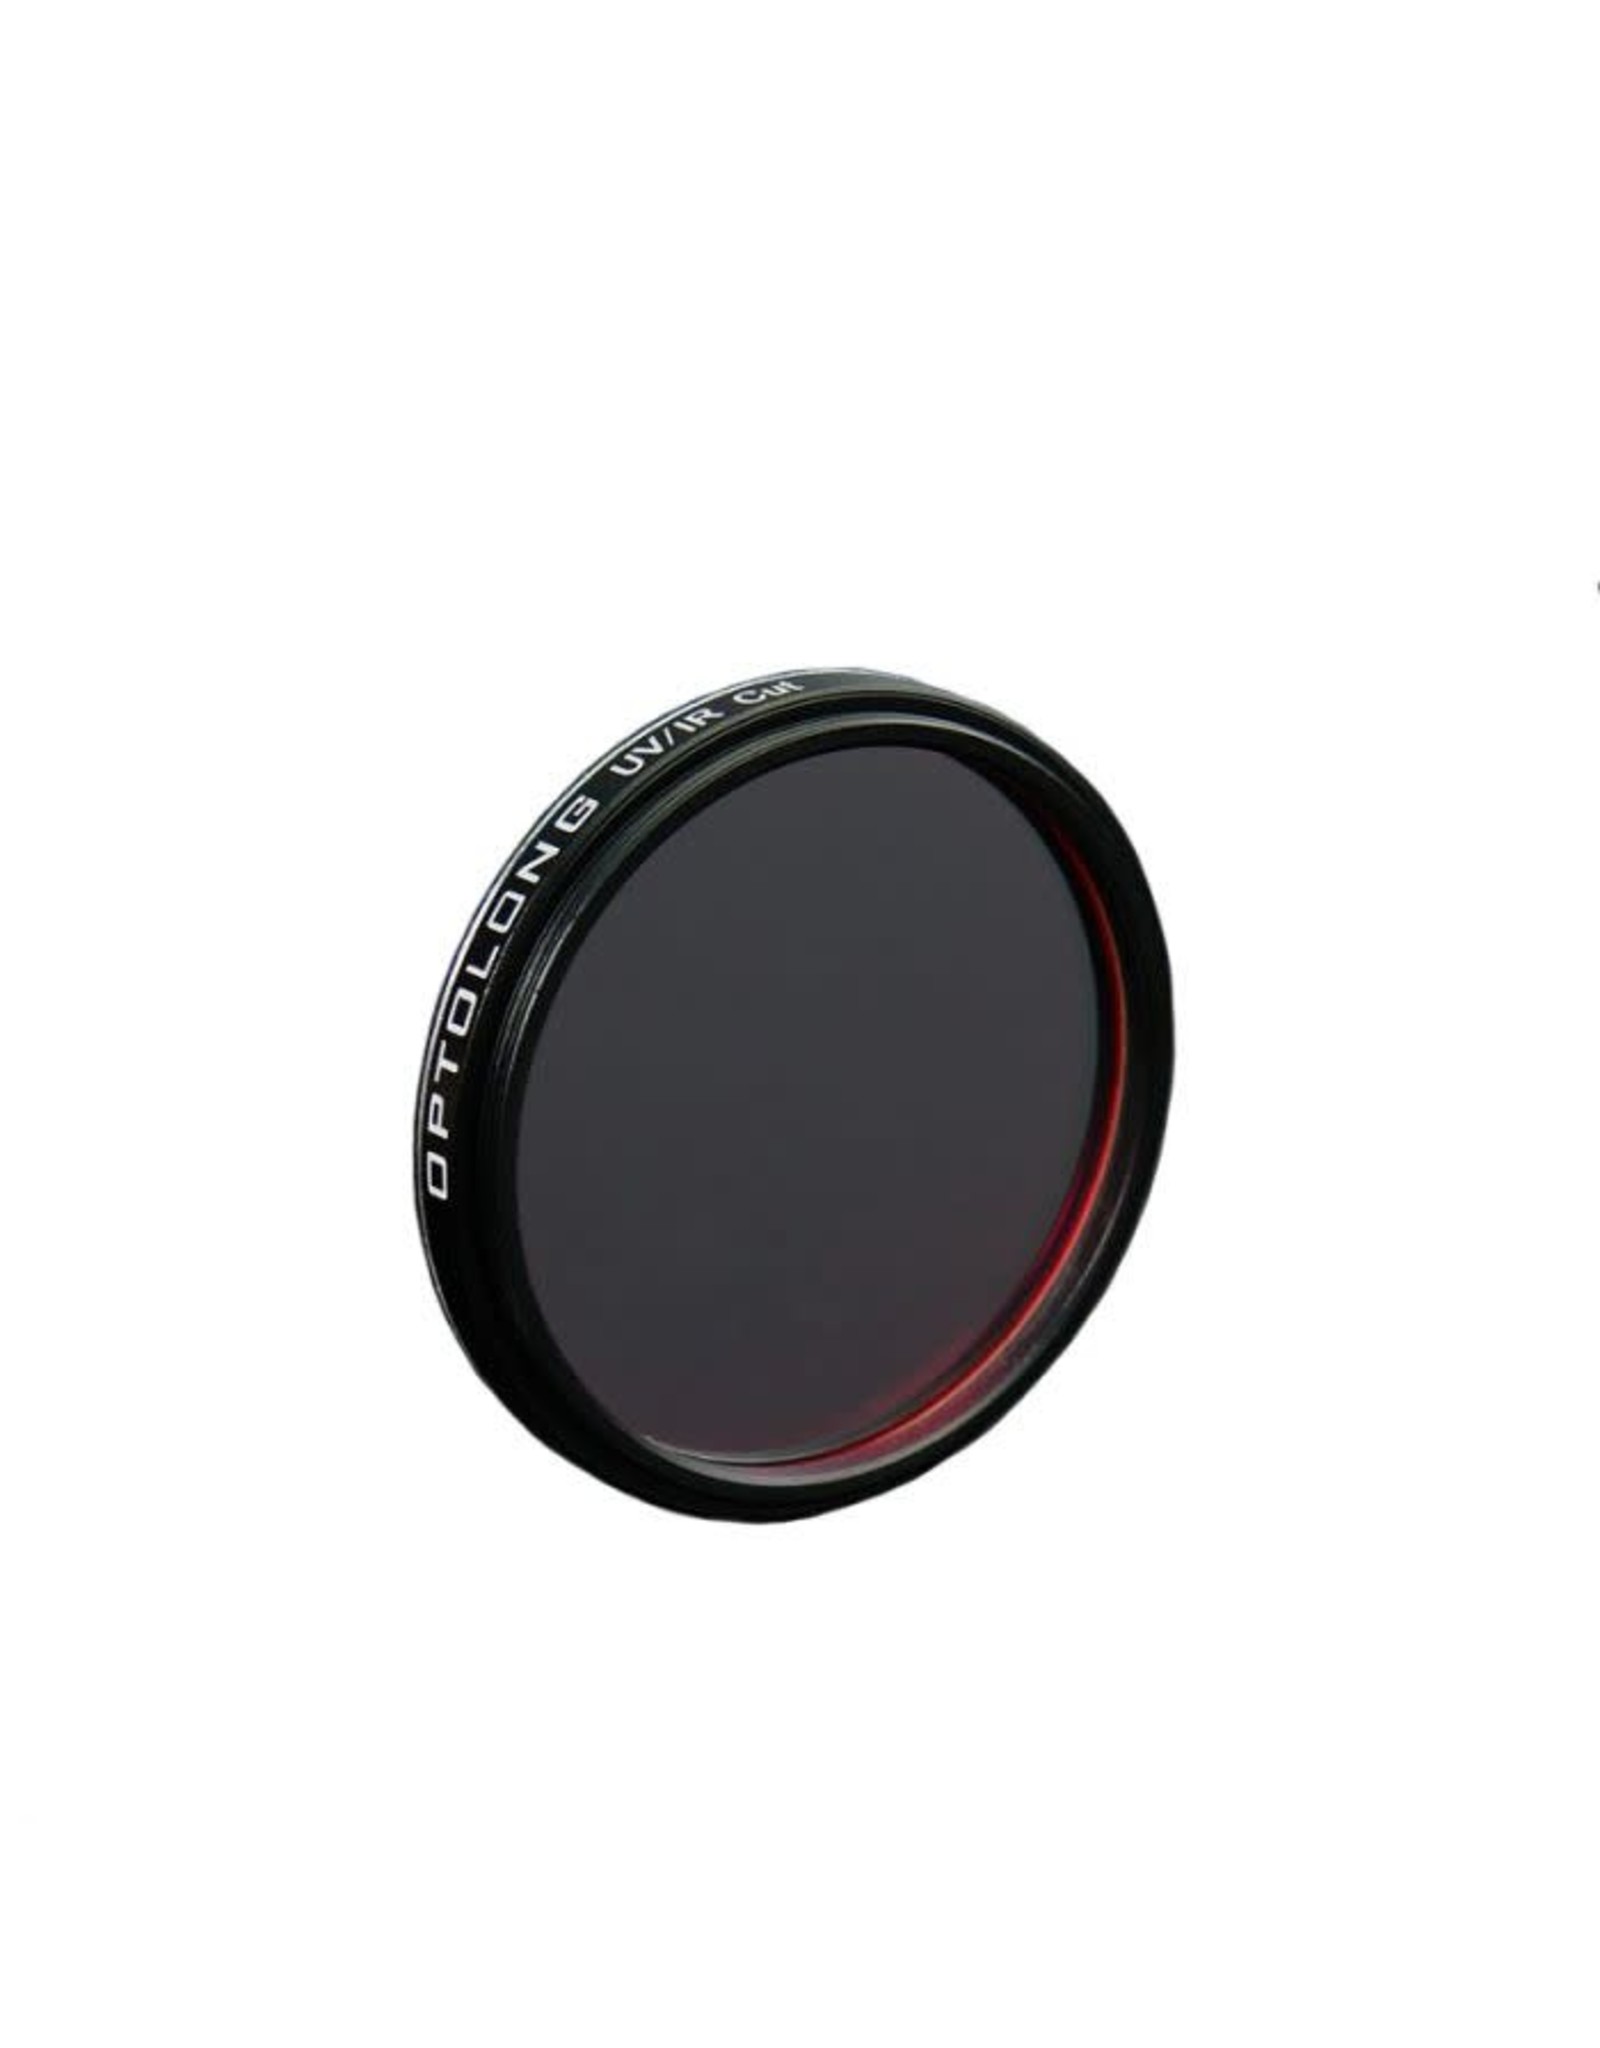 Optolong Optolong UV-IR Cut Filter - 2" Mounted - UVIR-200